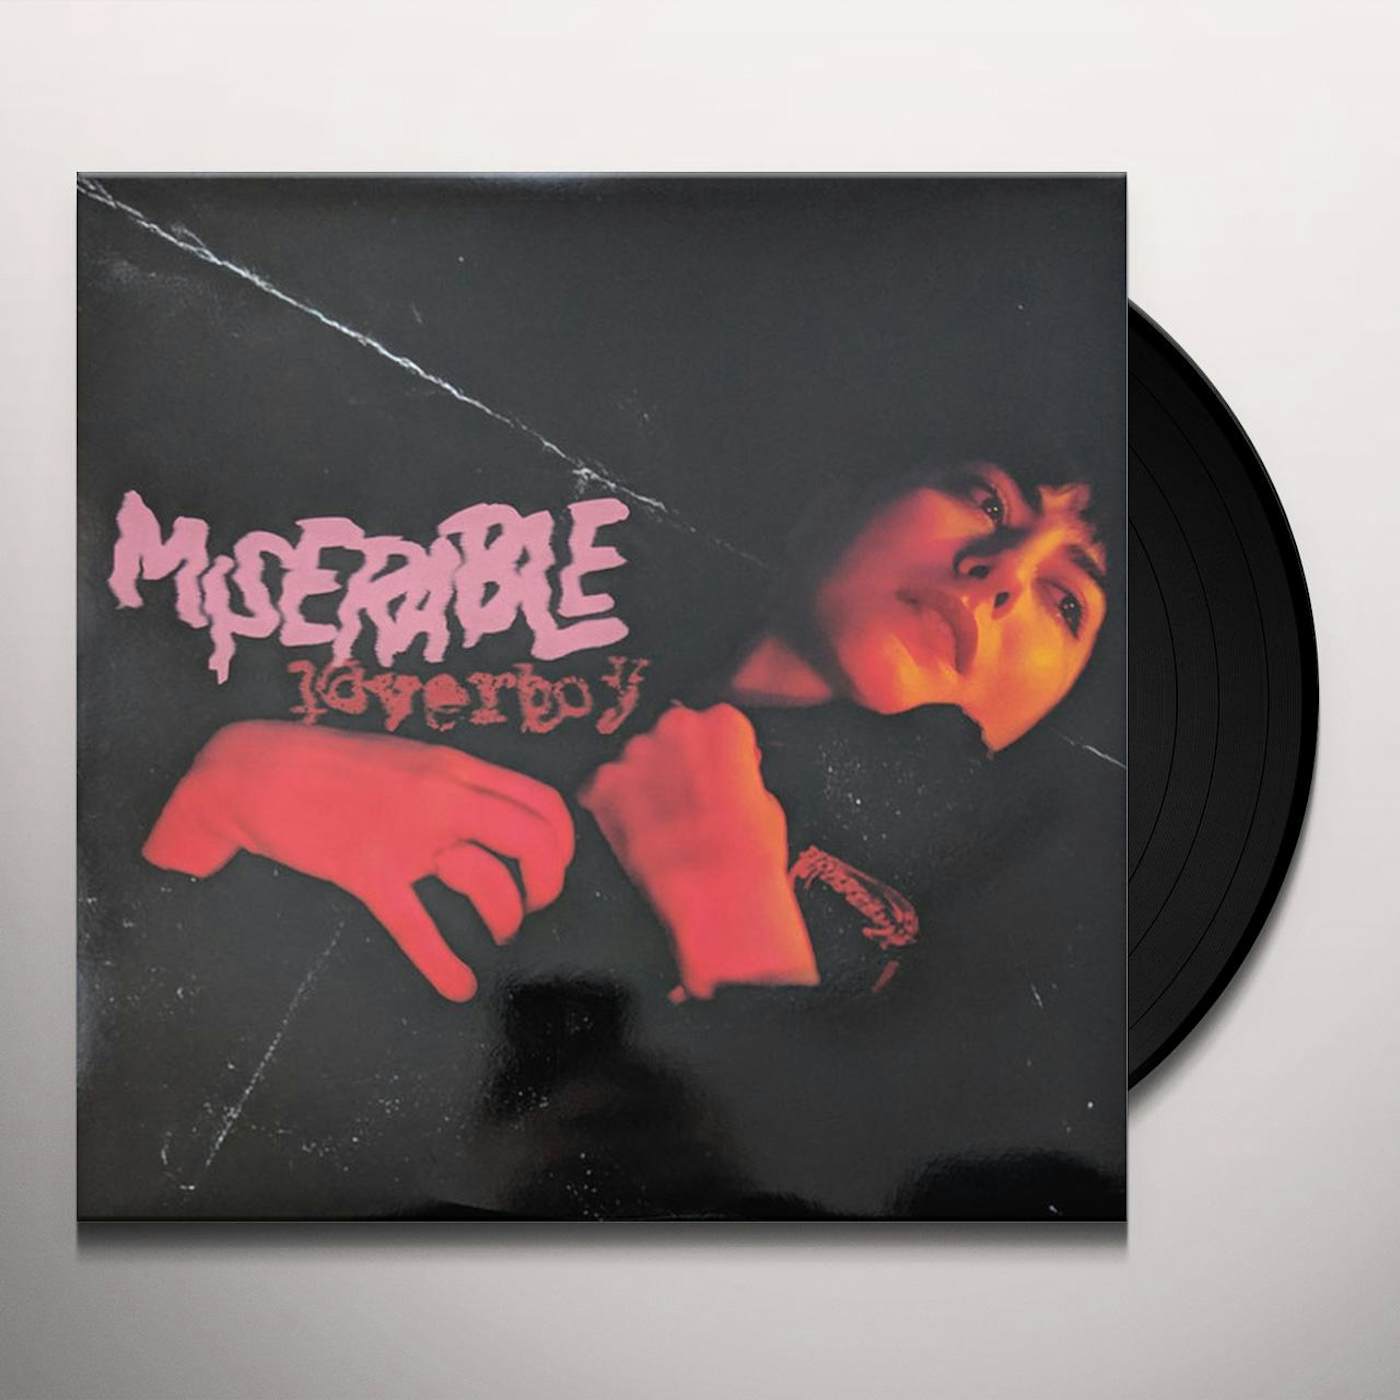 Miserable Loverboy / Dog Days Vinyl Record